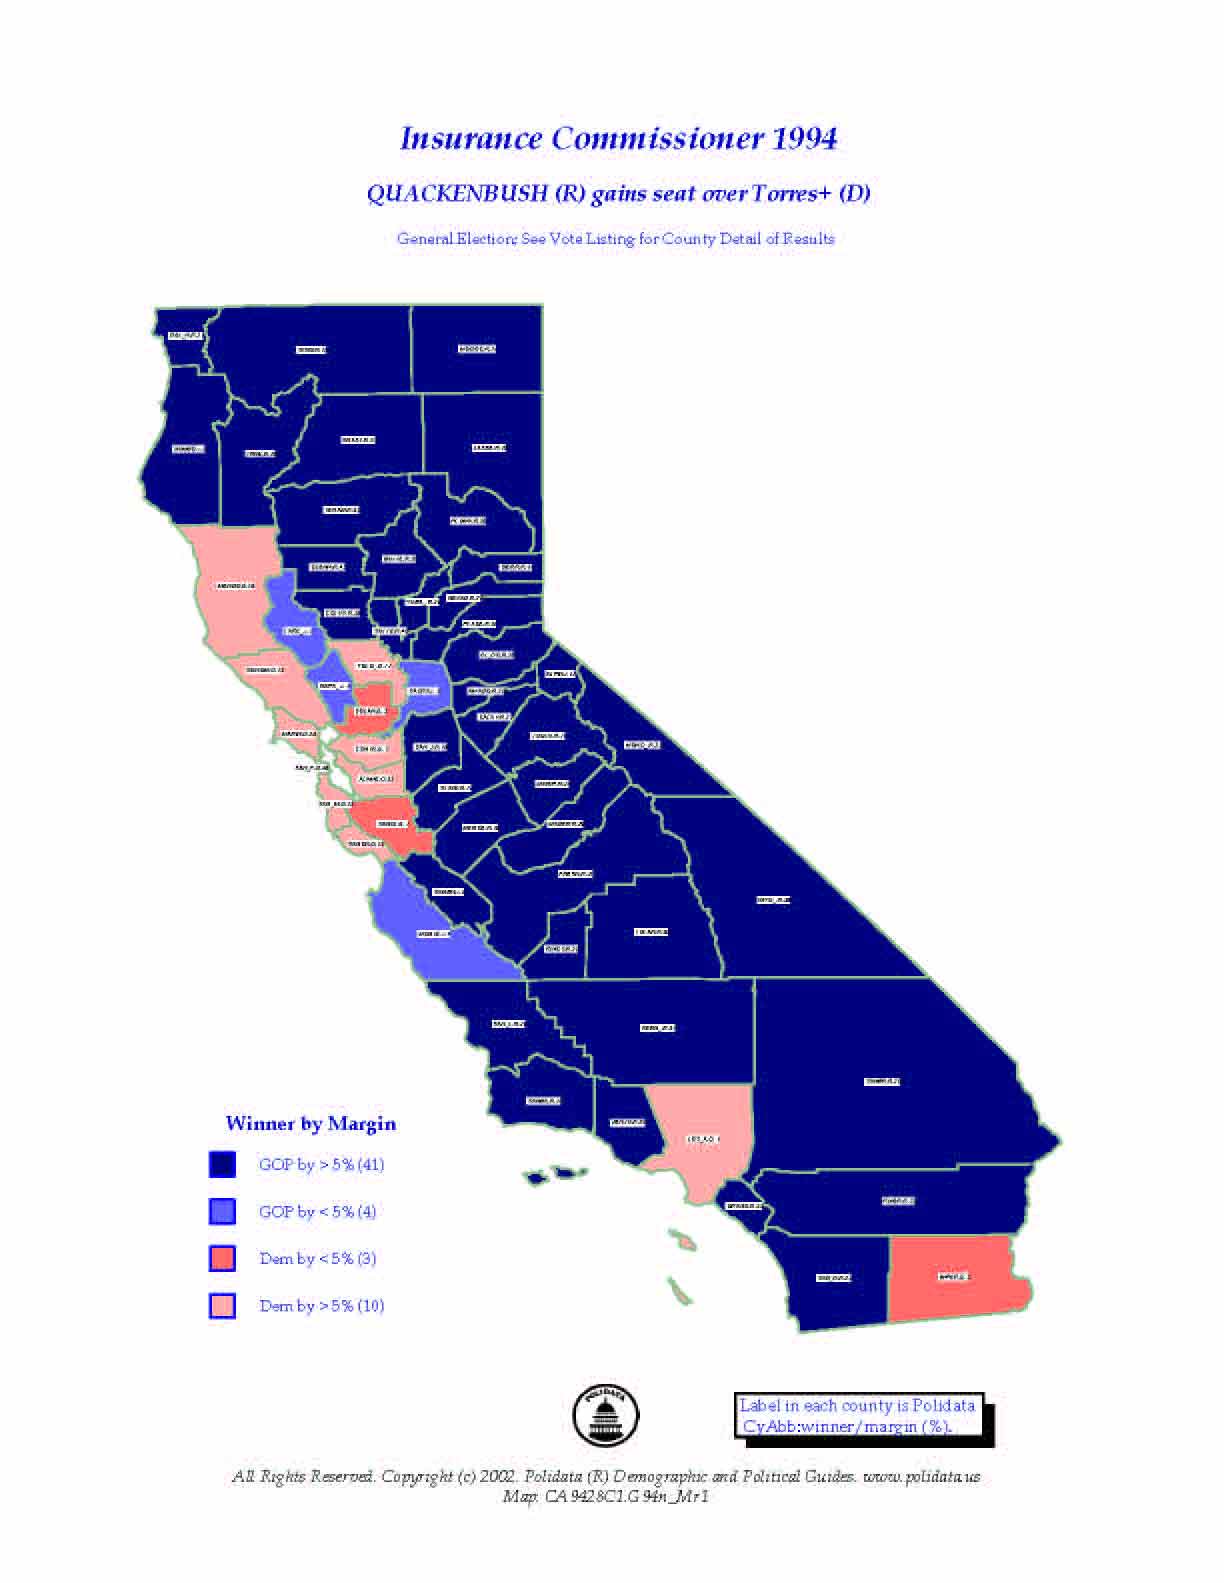 california political map